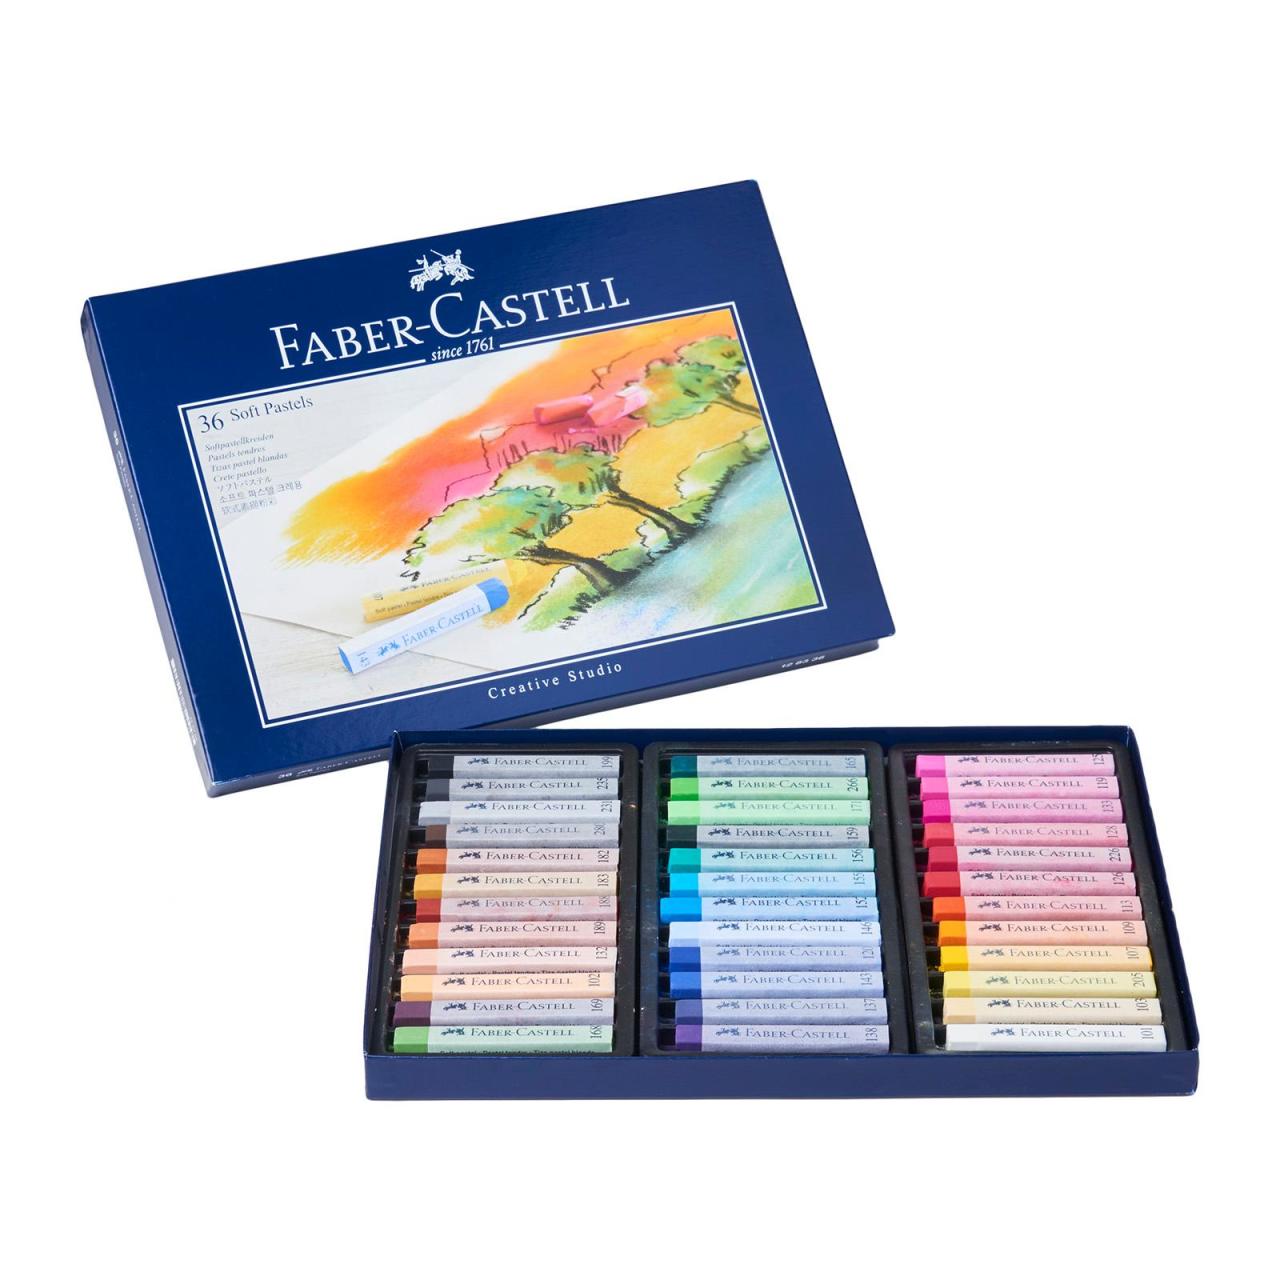 Faber Castell Creative Studio Toz (Soft) Pastel Boya 36 Renk Tam Boy